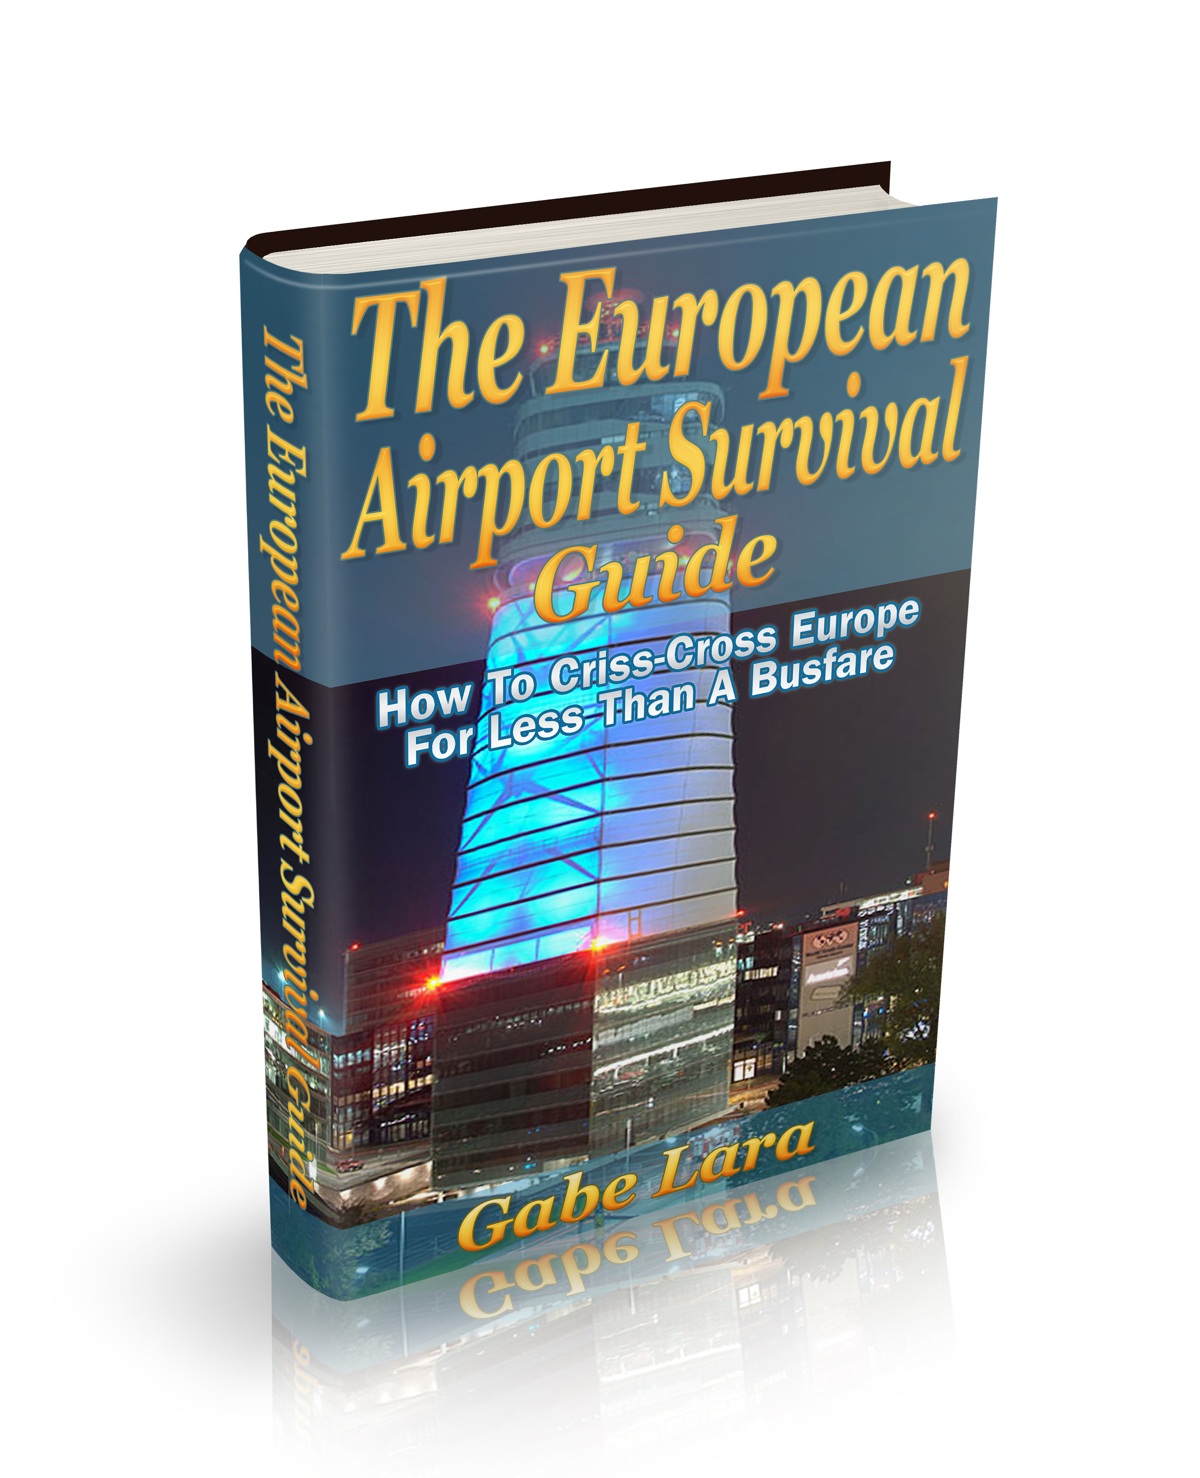 The European Airport Survival Guide